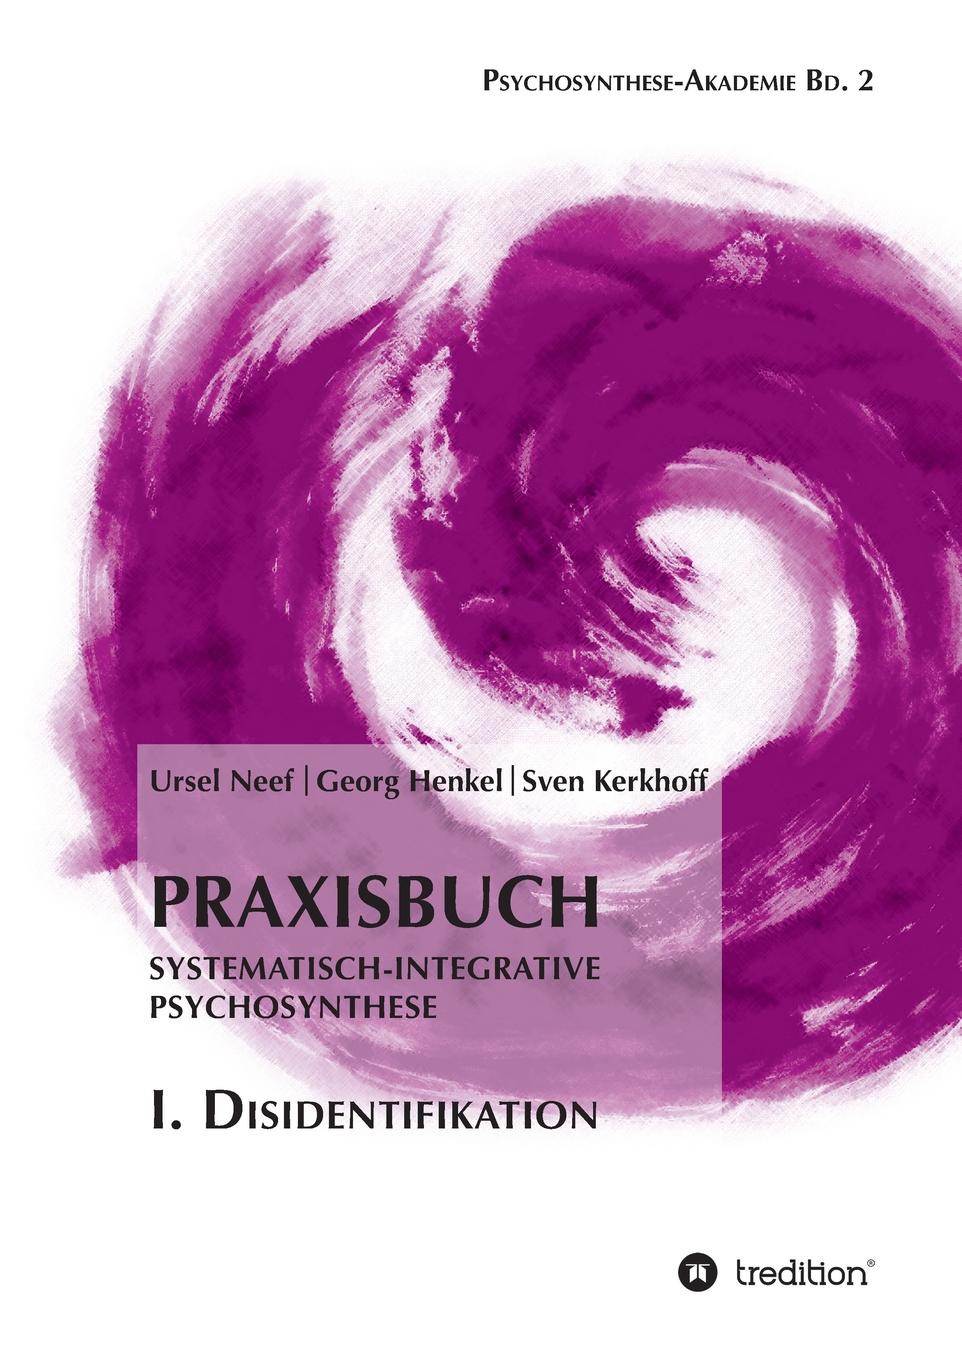 Praxisbuch Systematisch-Integrative Psychosynthese. I. Disidentifikation